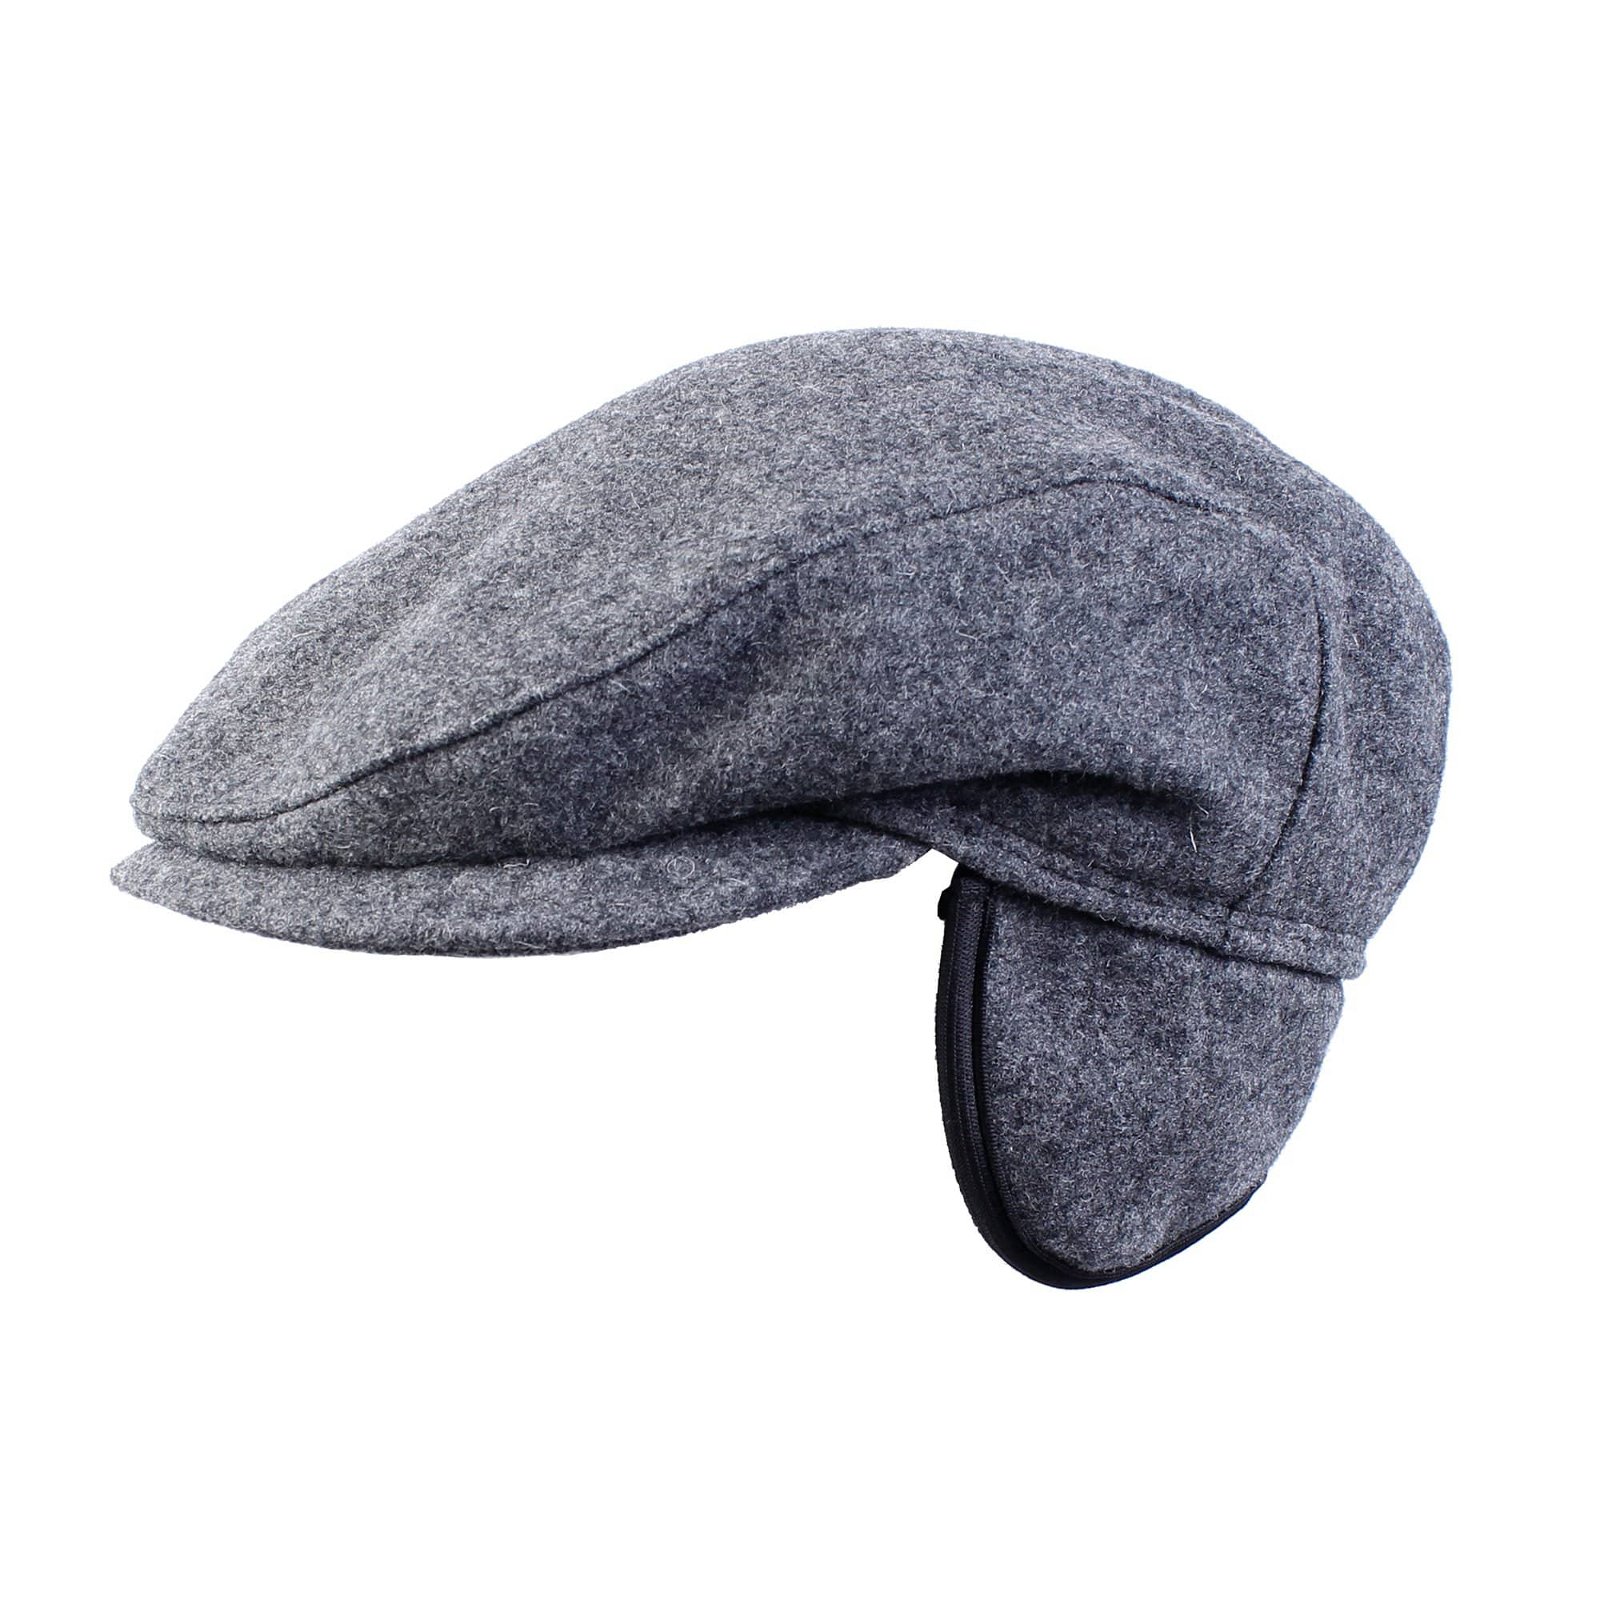 Image of Wigens Men's Melton Wool Slim Ivy Cap with Ear Flaps